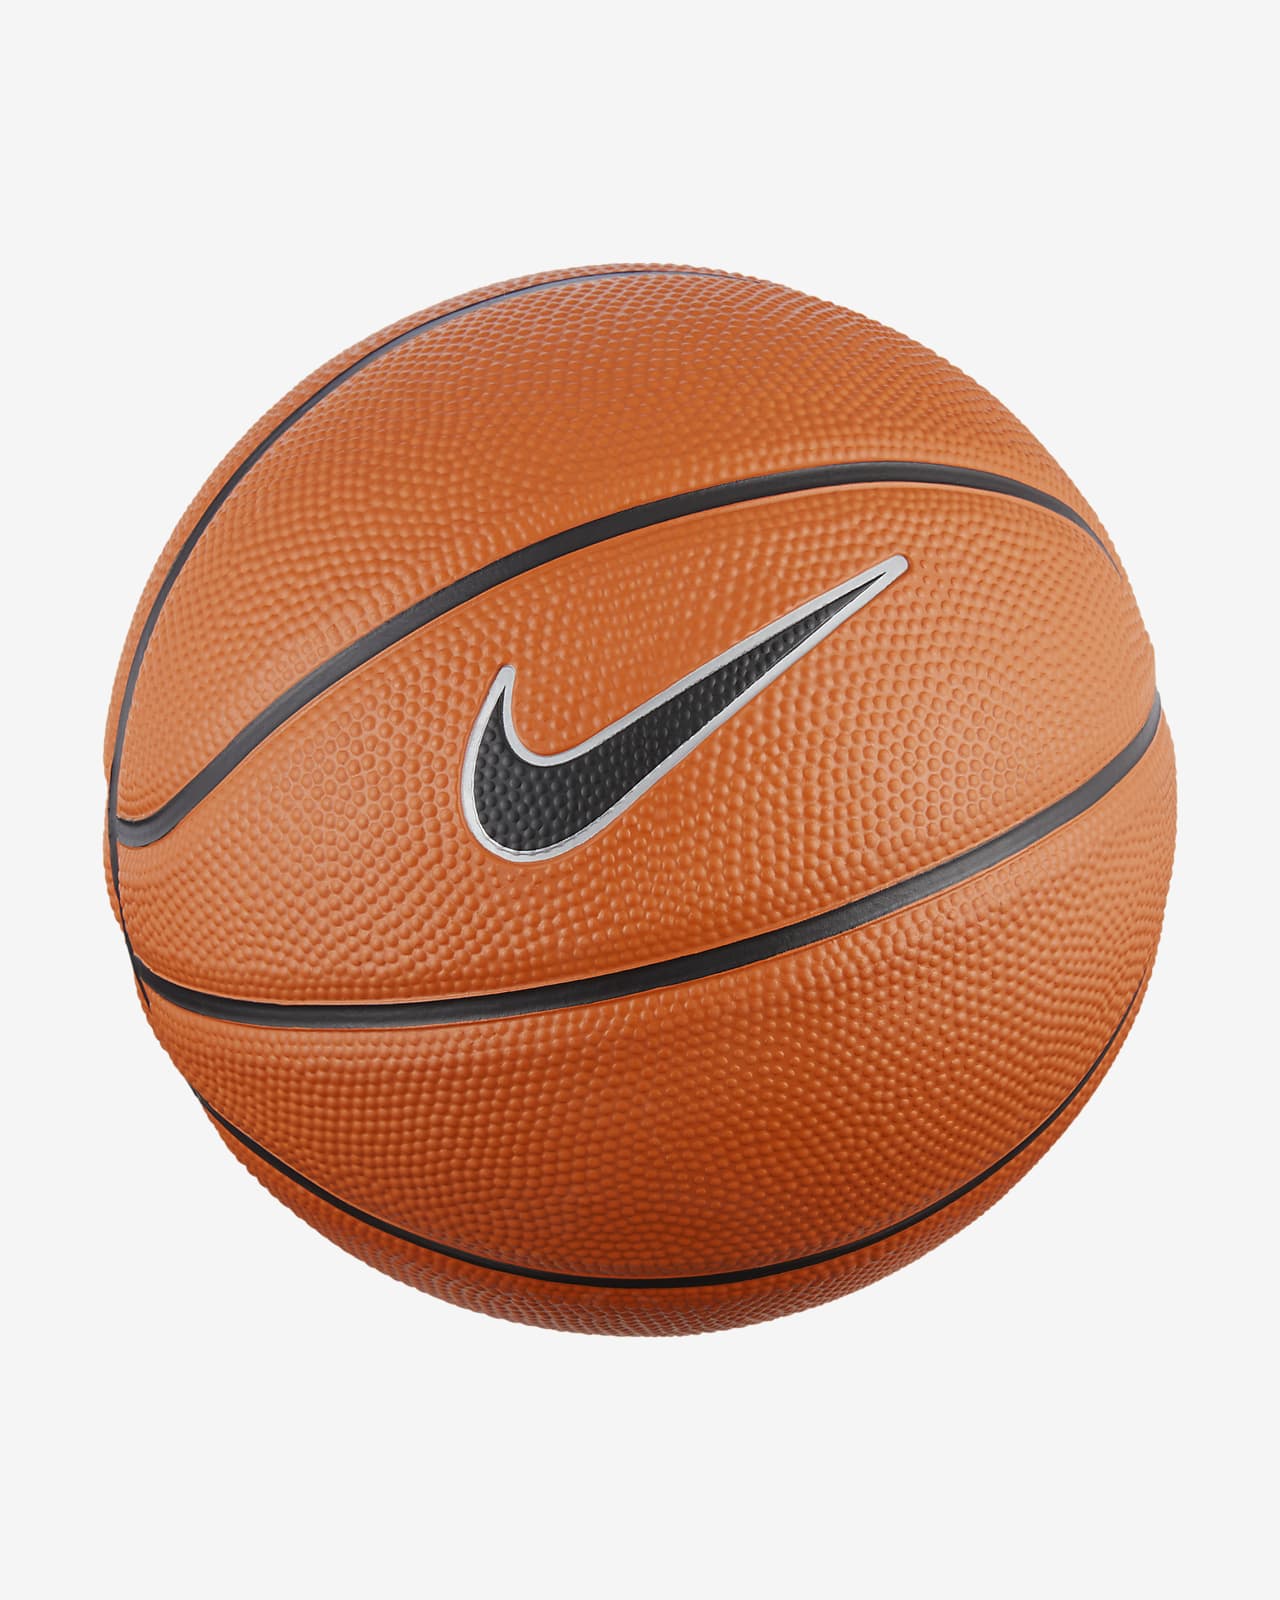 Nike Skills Basketball (Size 3)